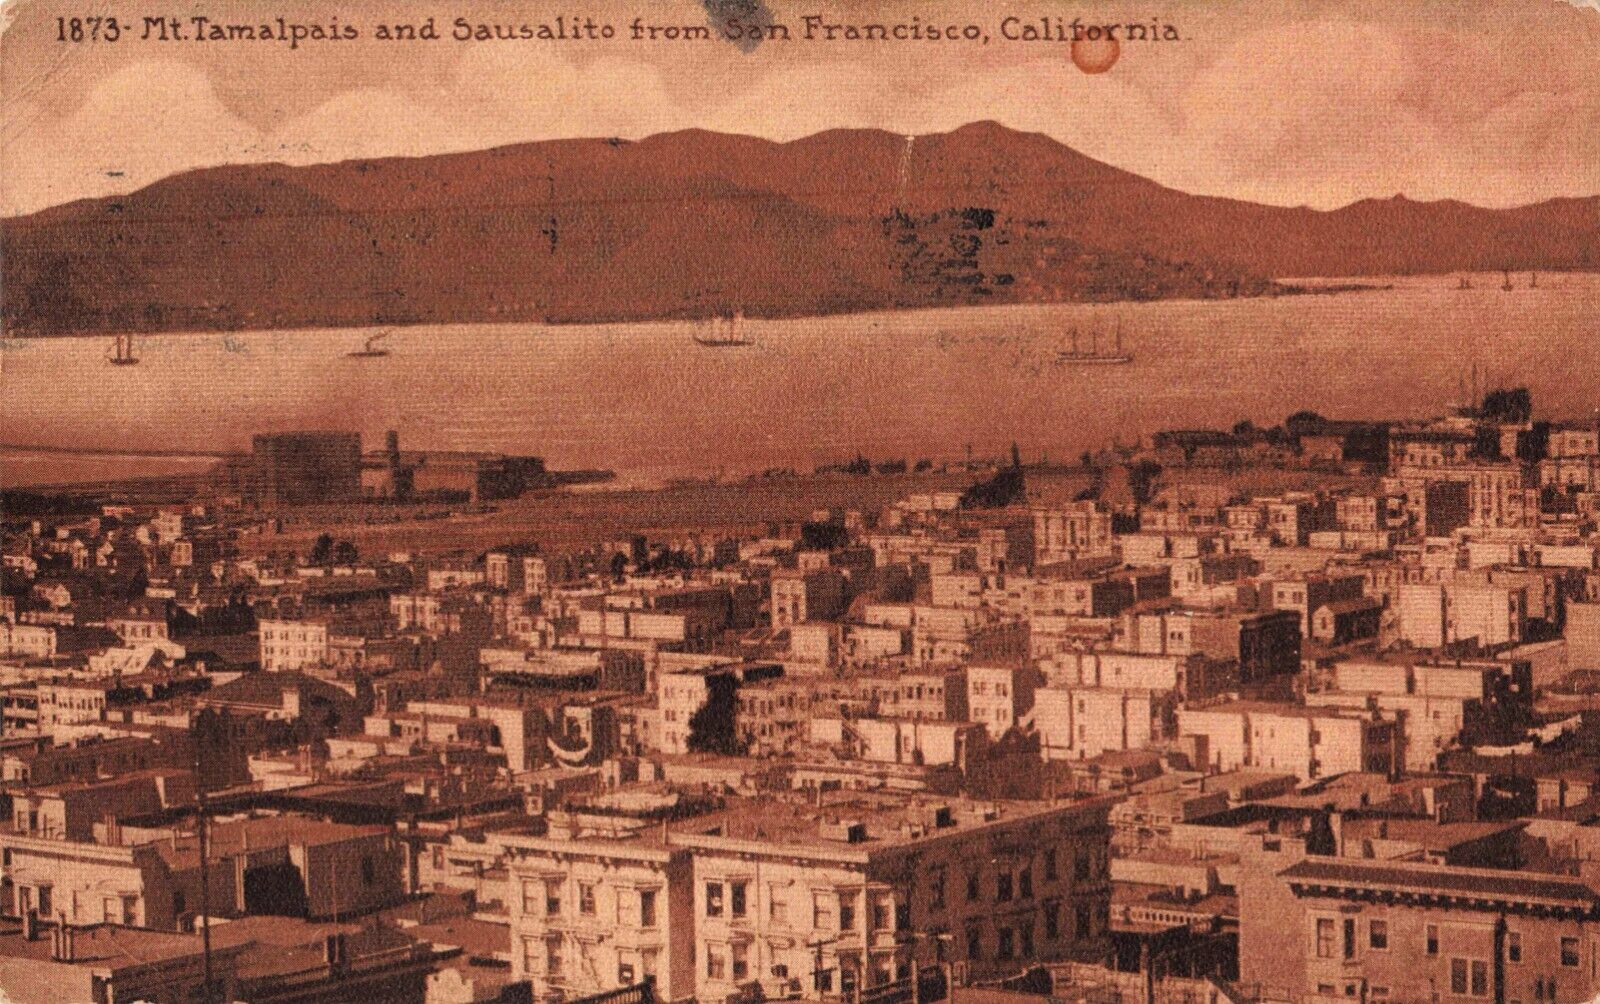 Mt. Tamalpais & Sausalito from San Francisco California CA 1915 Edward Mitchell